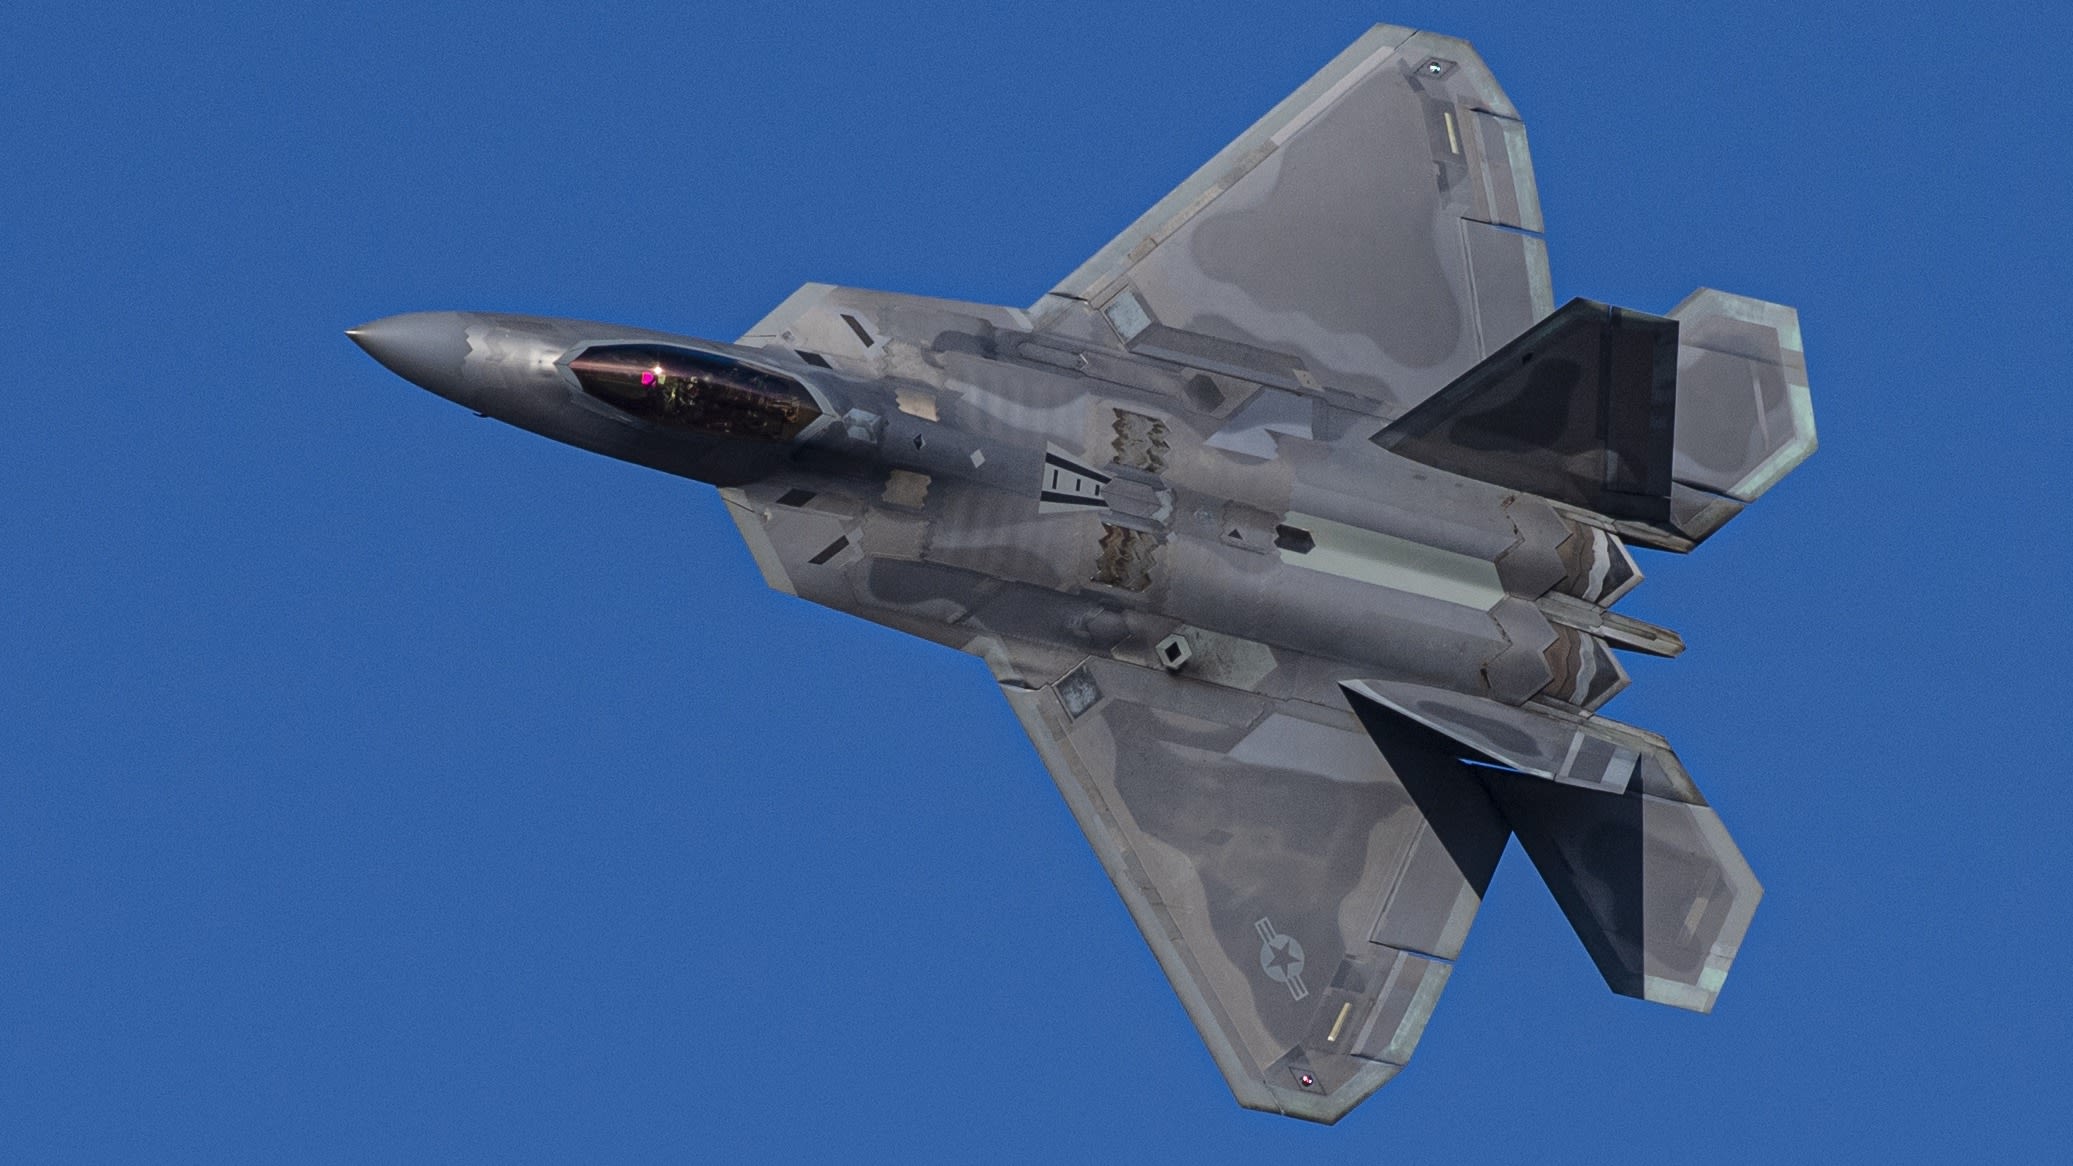 Unieke blik op F22 Raptor: 'paradepaardje' Amerikaanse luchtmacht in Nederland